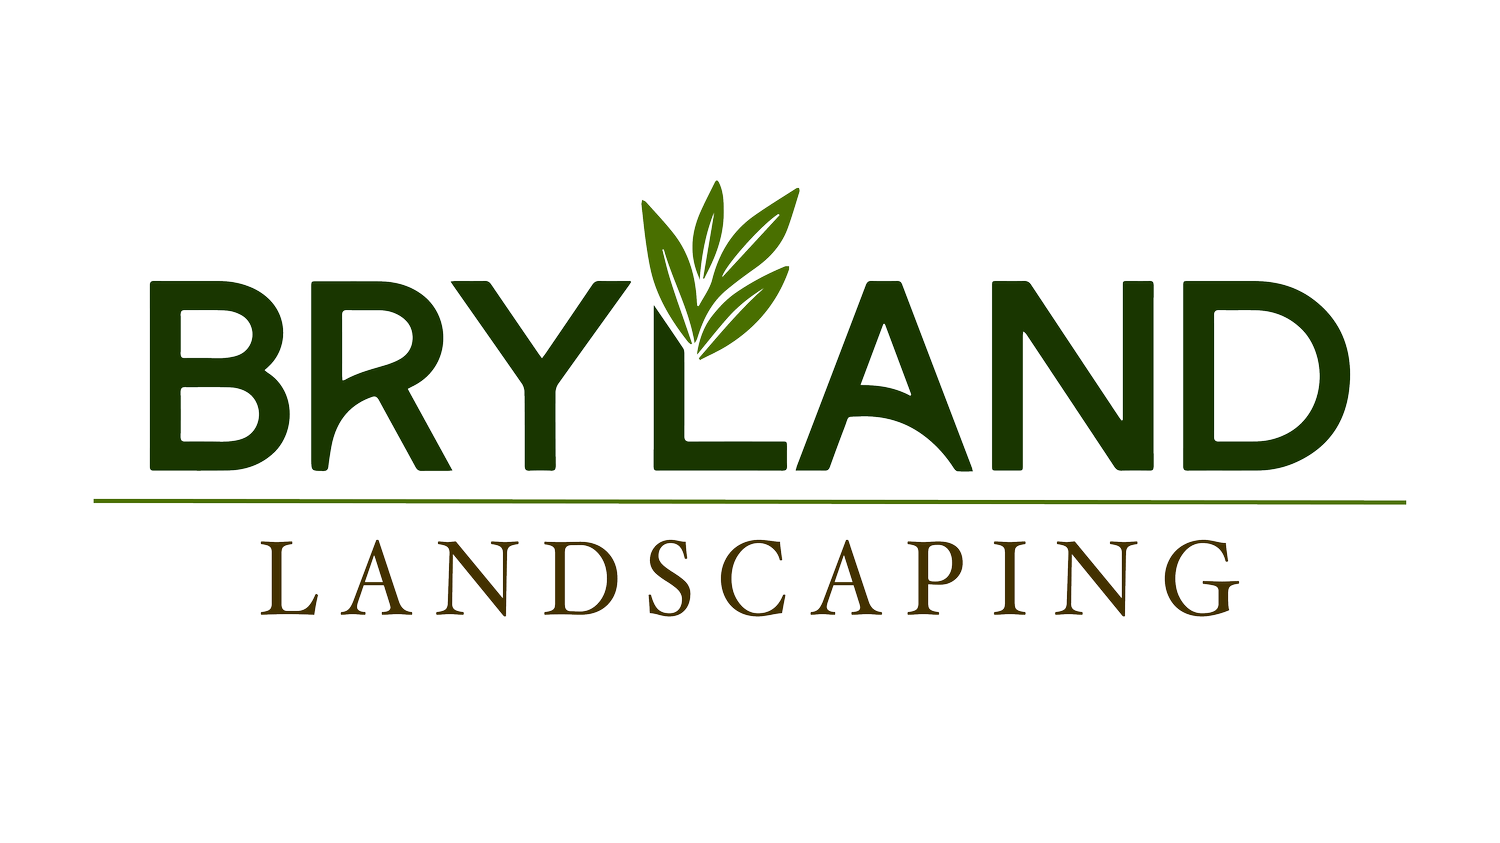 Bryland Landscaping